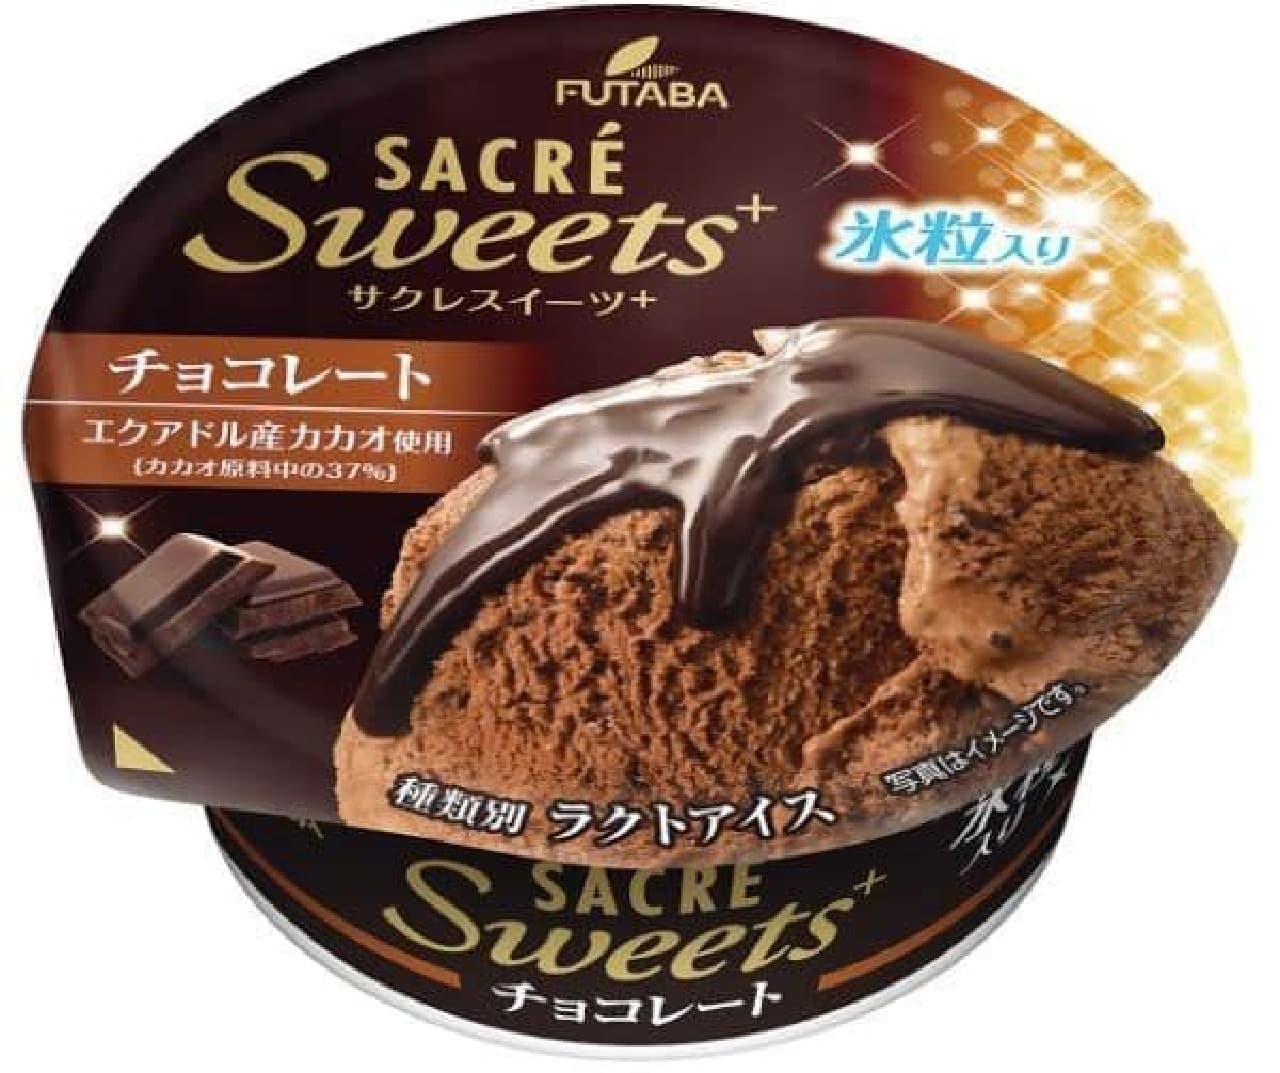 Futaba Foods "Sacre Sweets + Chocolate"